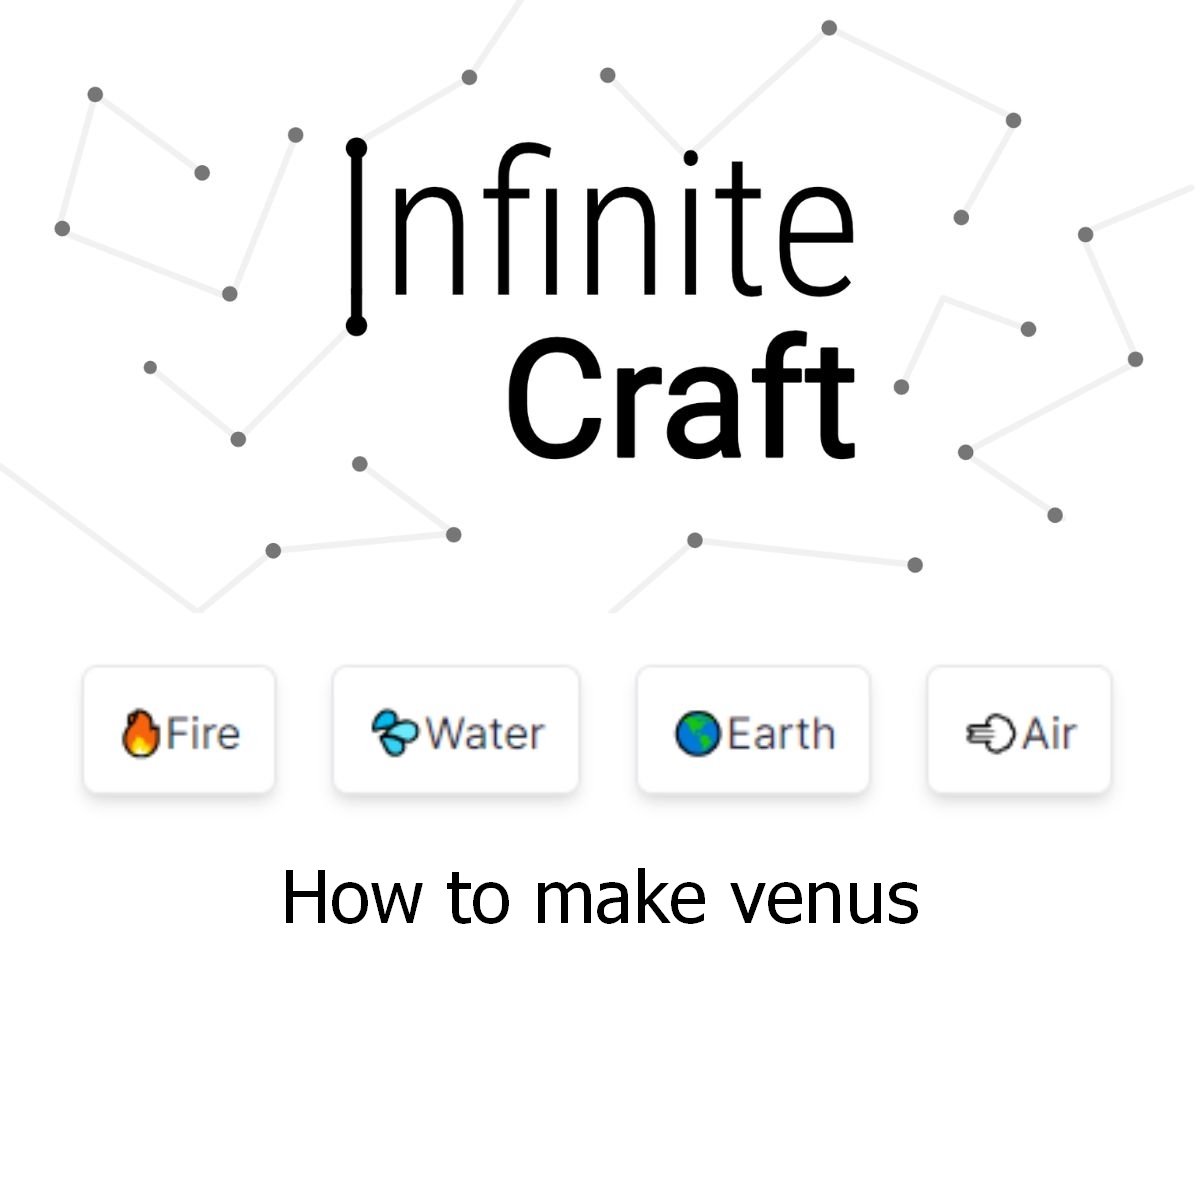 how to make venus in infinite craft